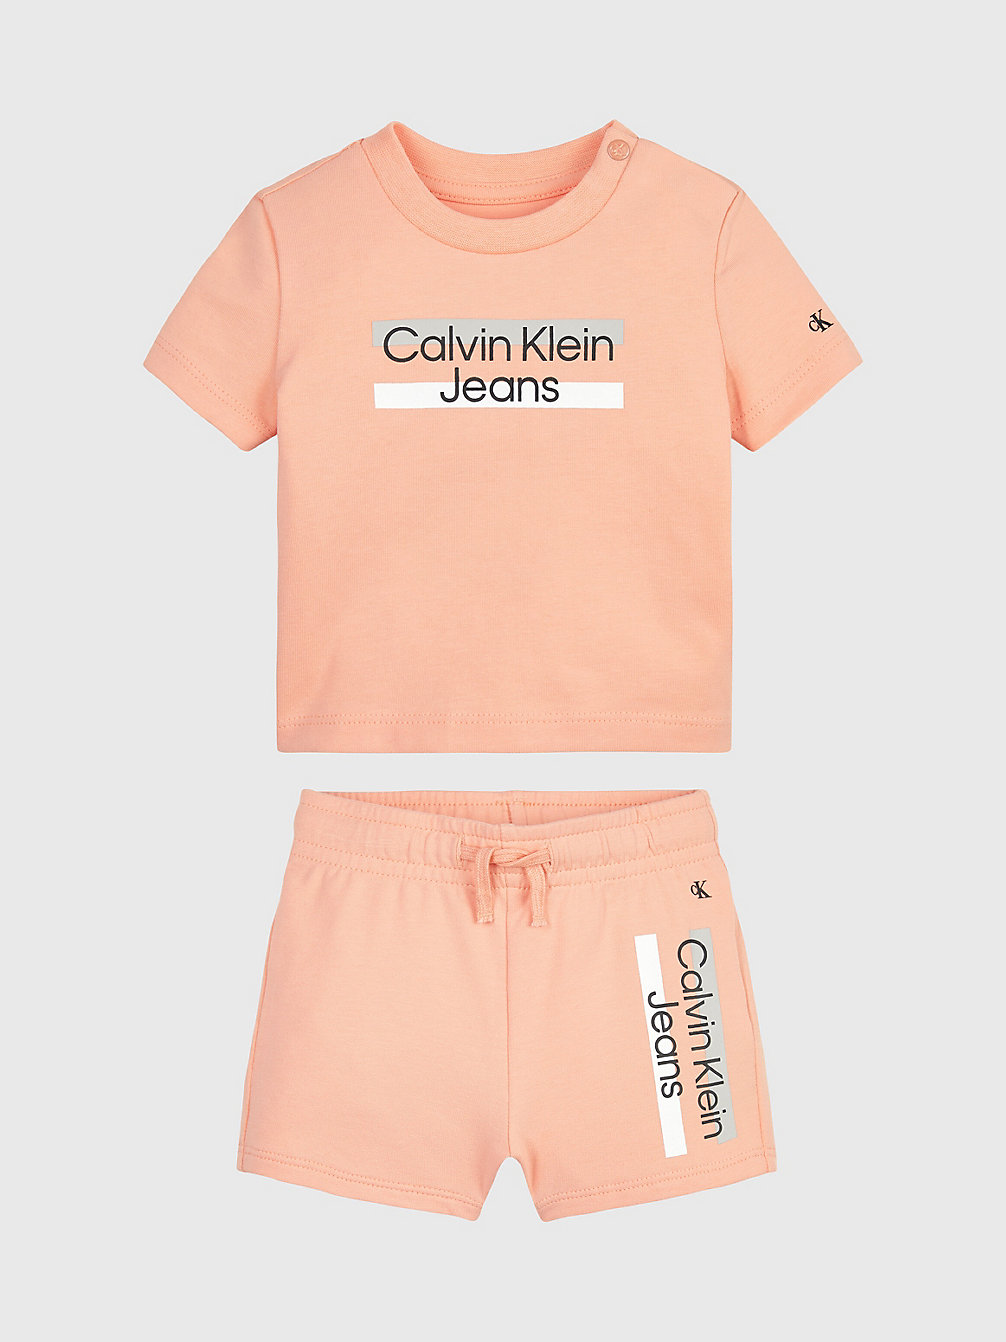 FRESH CANTALOUPE Newborn T-Shirt And Shorts Set undefined newborn Calvin Klein